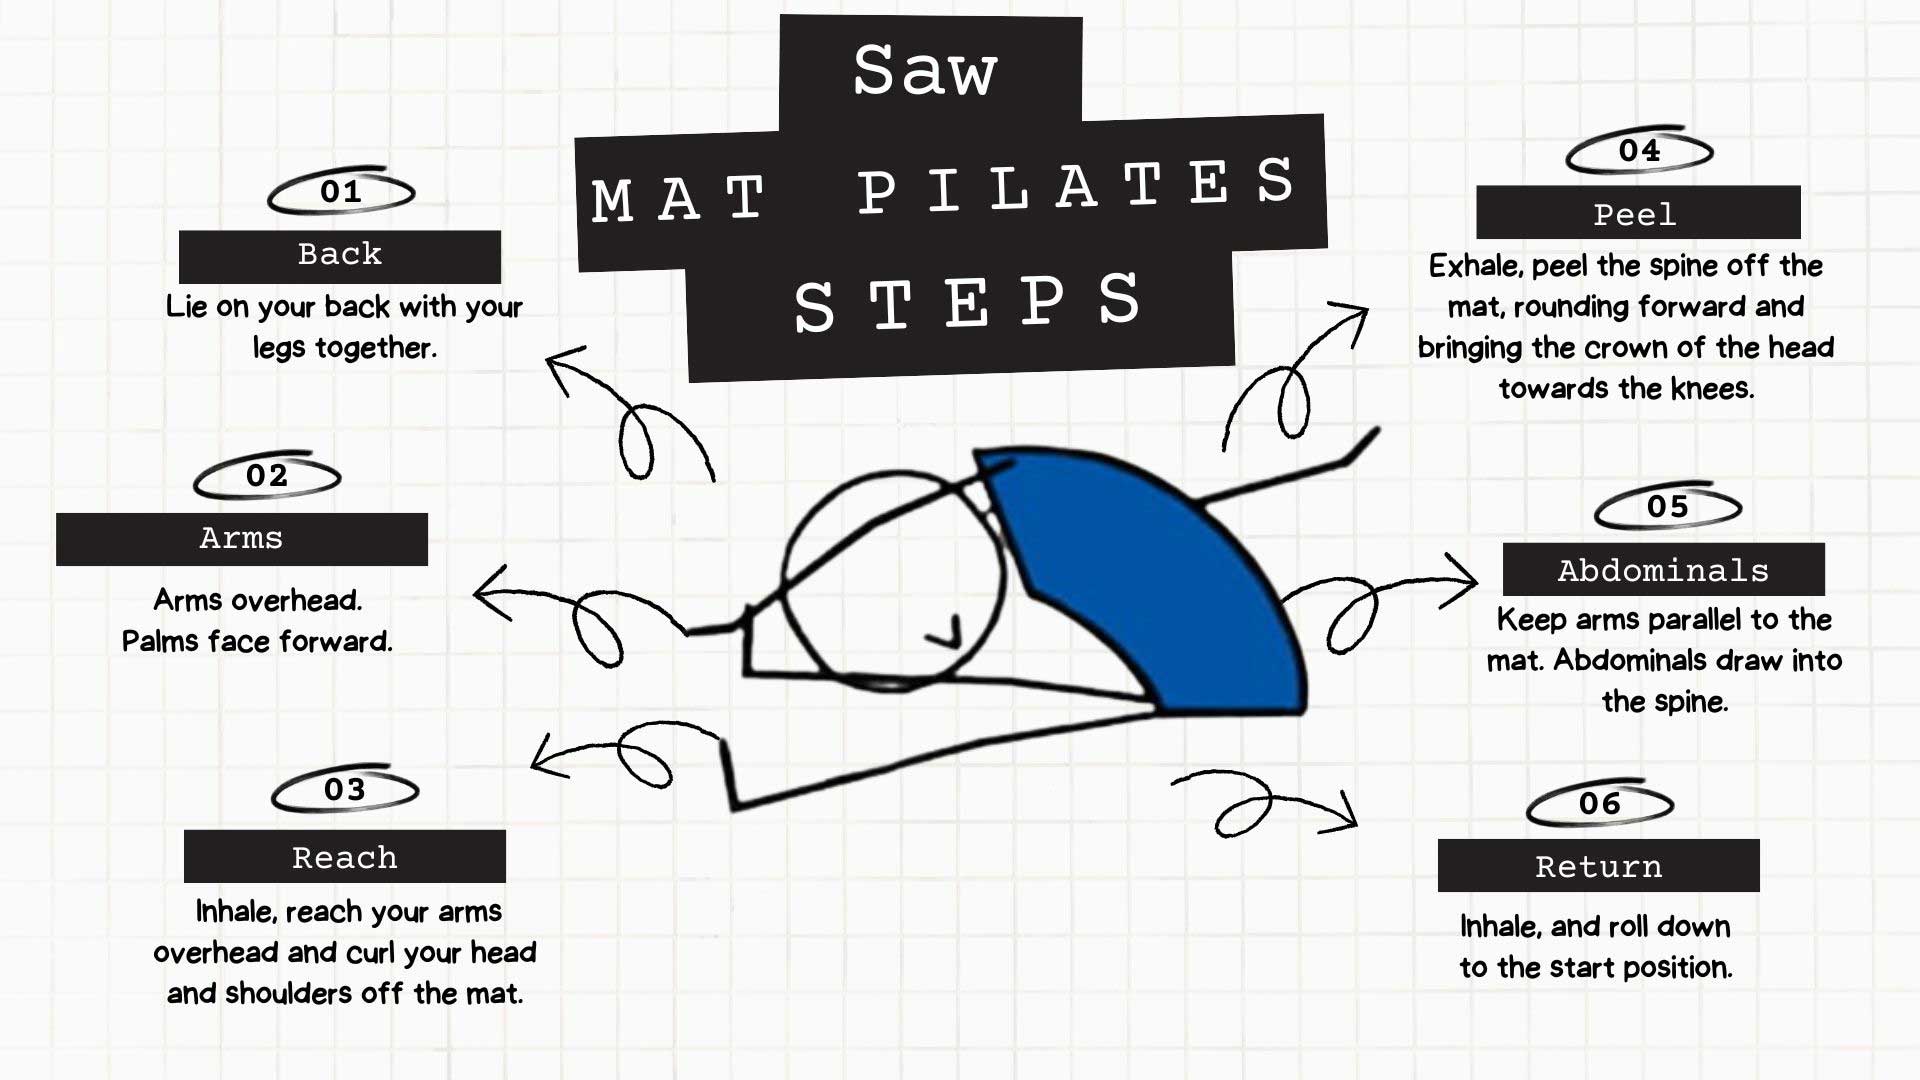 Saw Pilates Steps Infographic